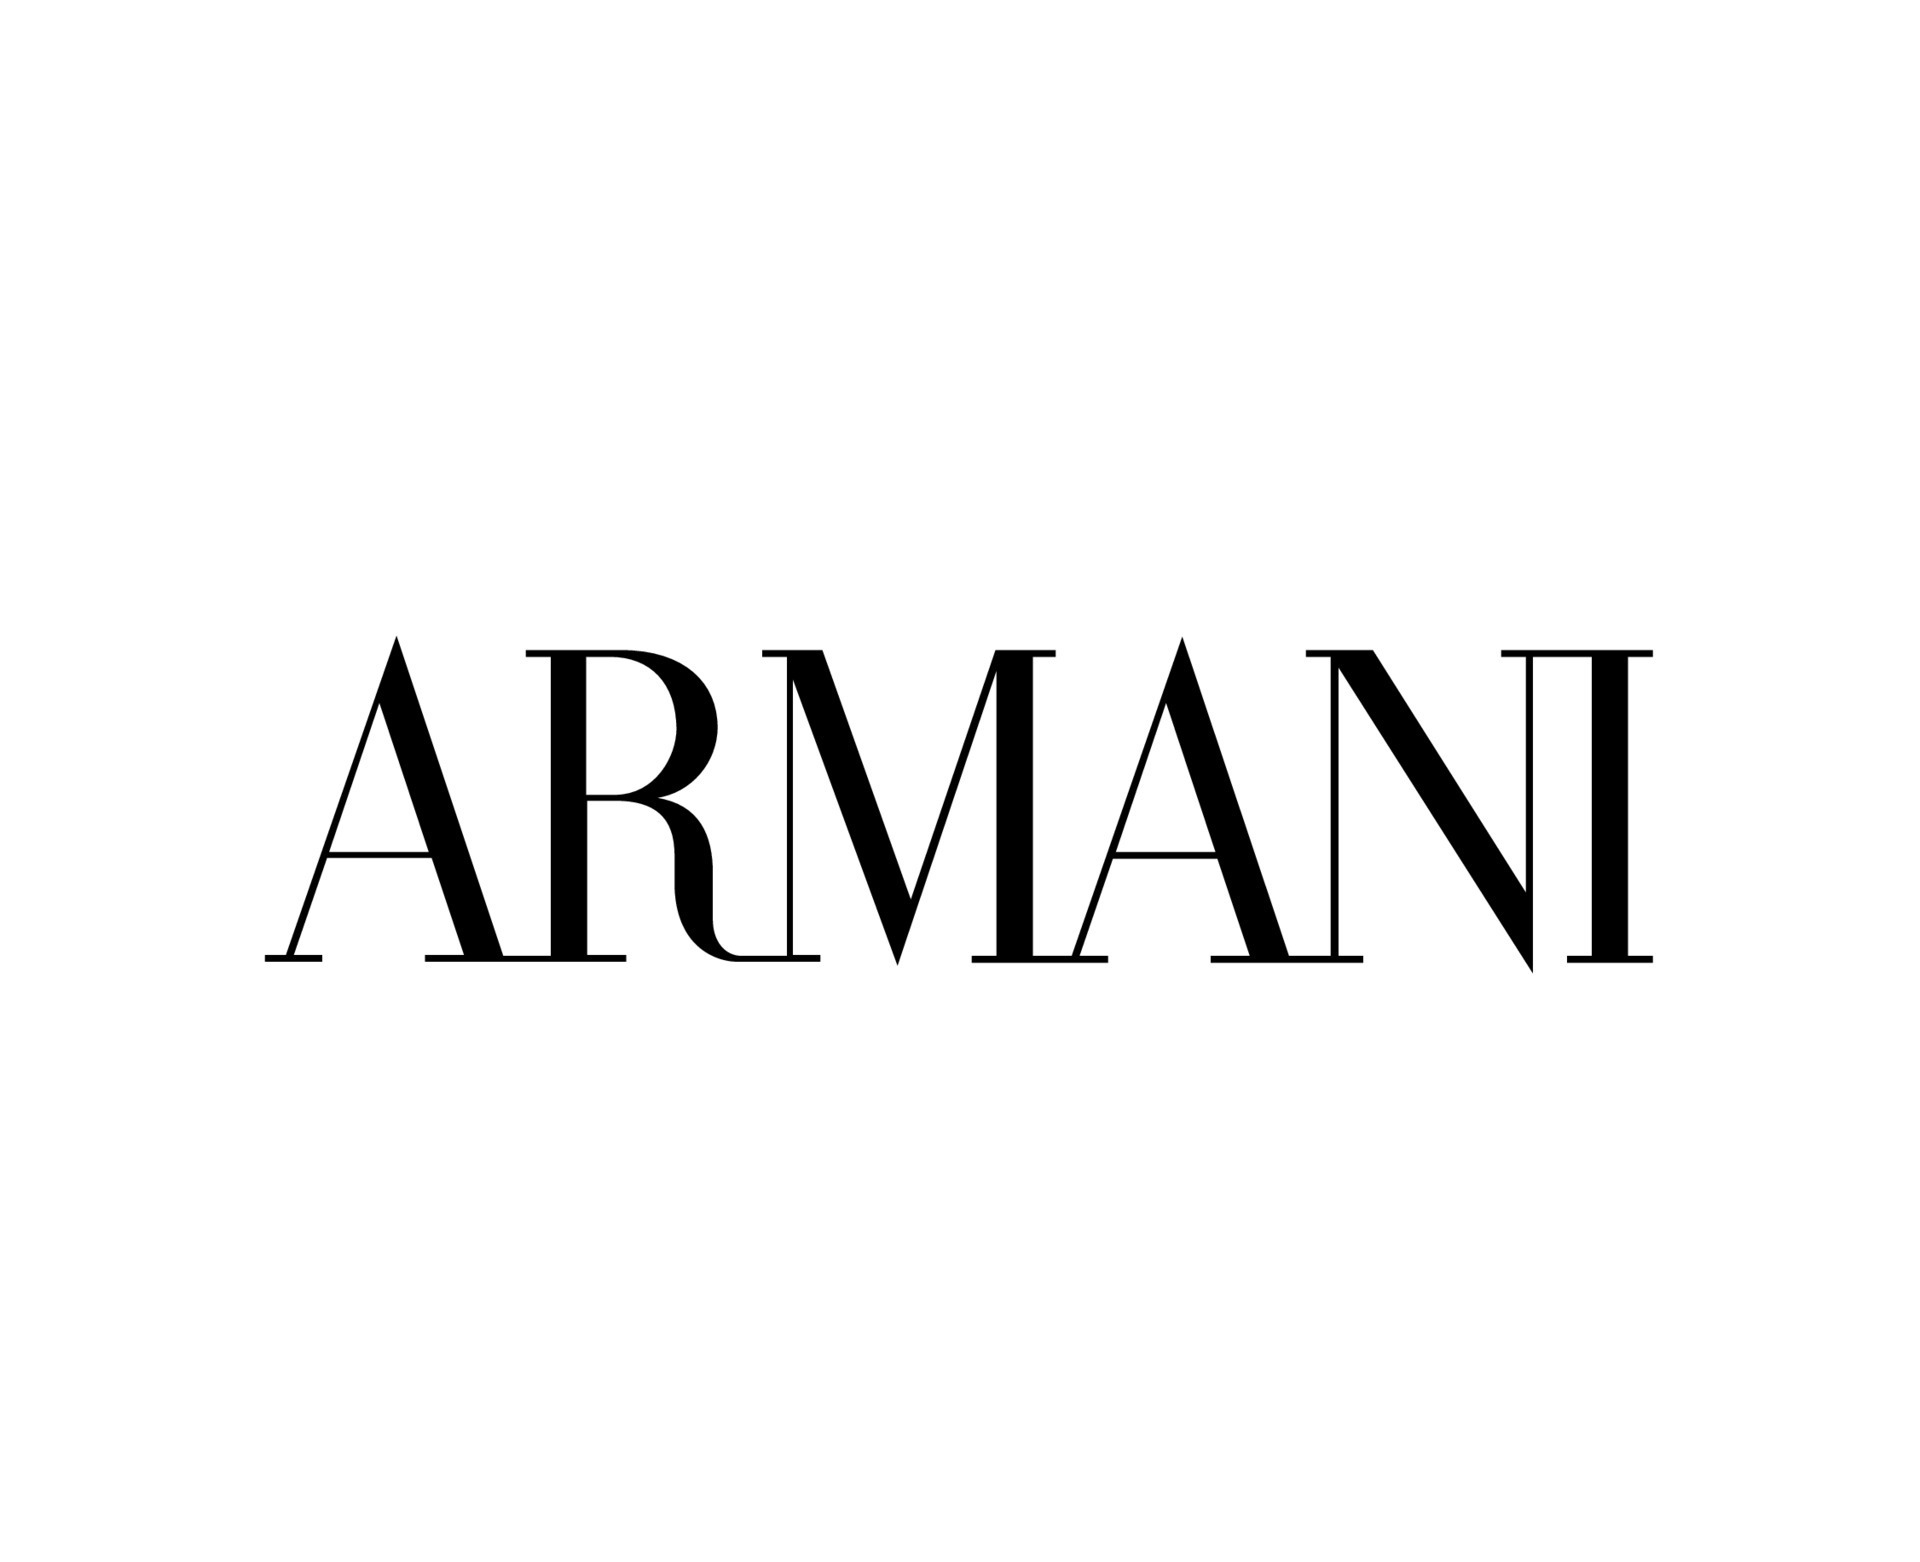 Emporio Armani Logo Brand Clothes Symbol Black Design Fashion Vector  Illustration 23585867 Vector Art at Vecteezy